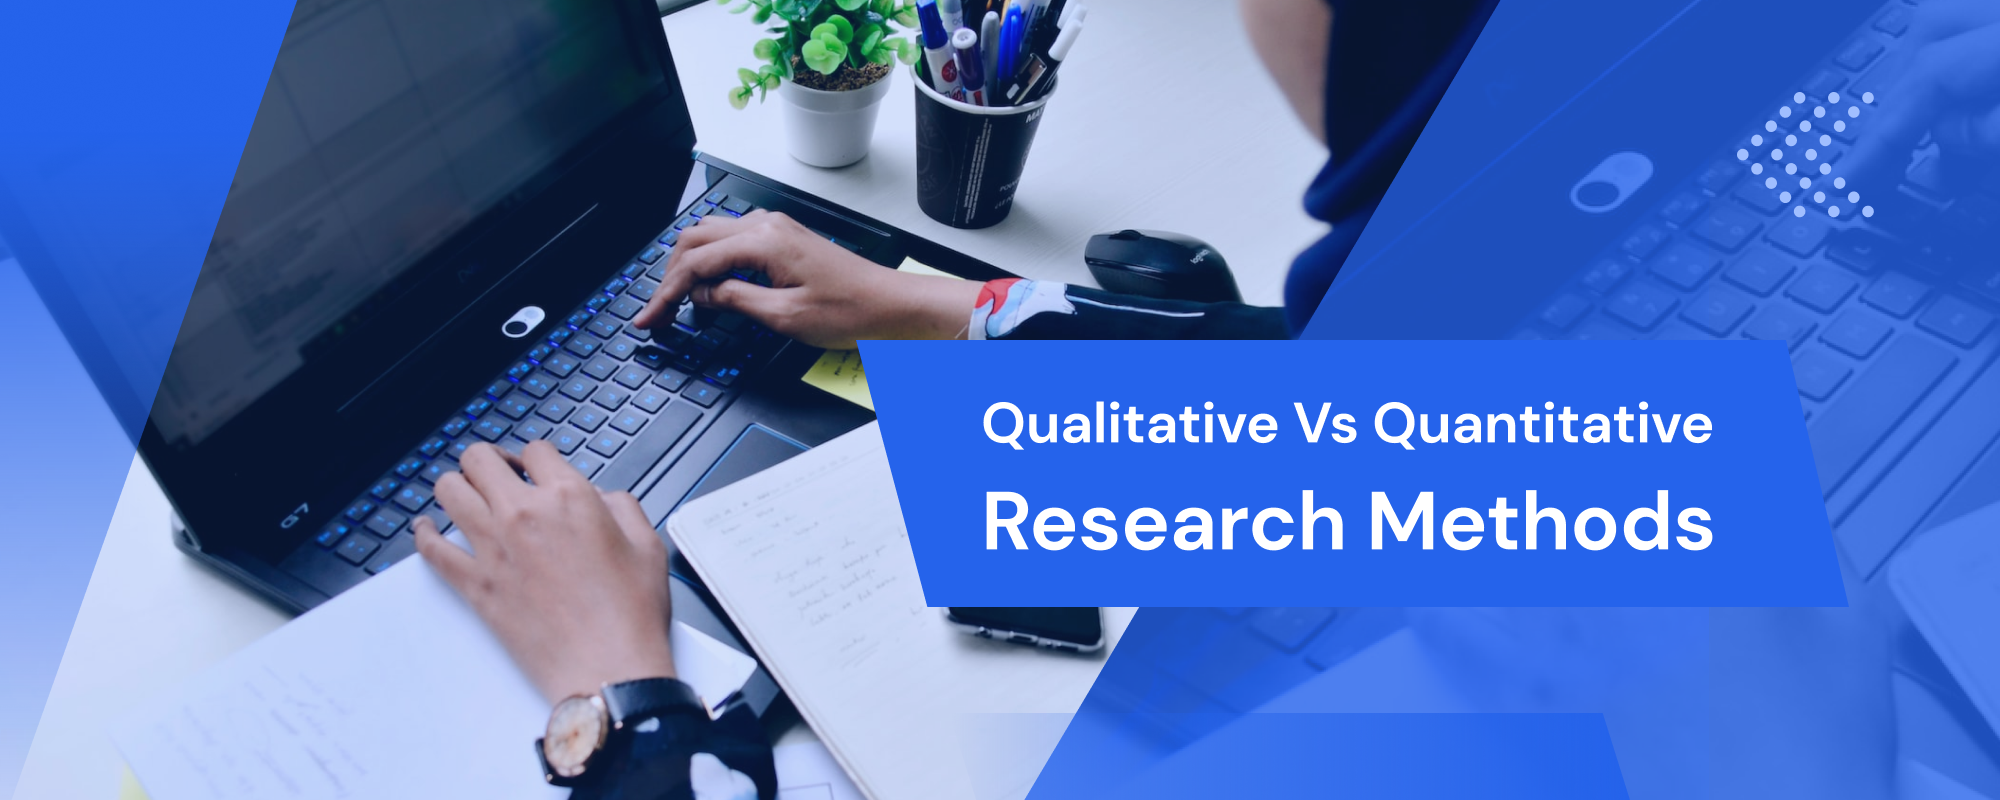  Qualitative and Quantitative Research